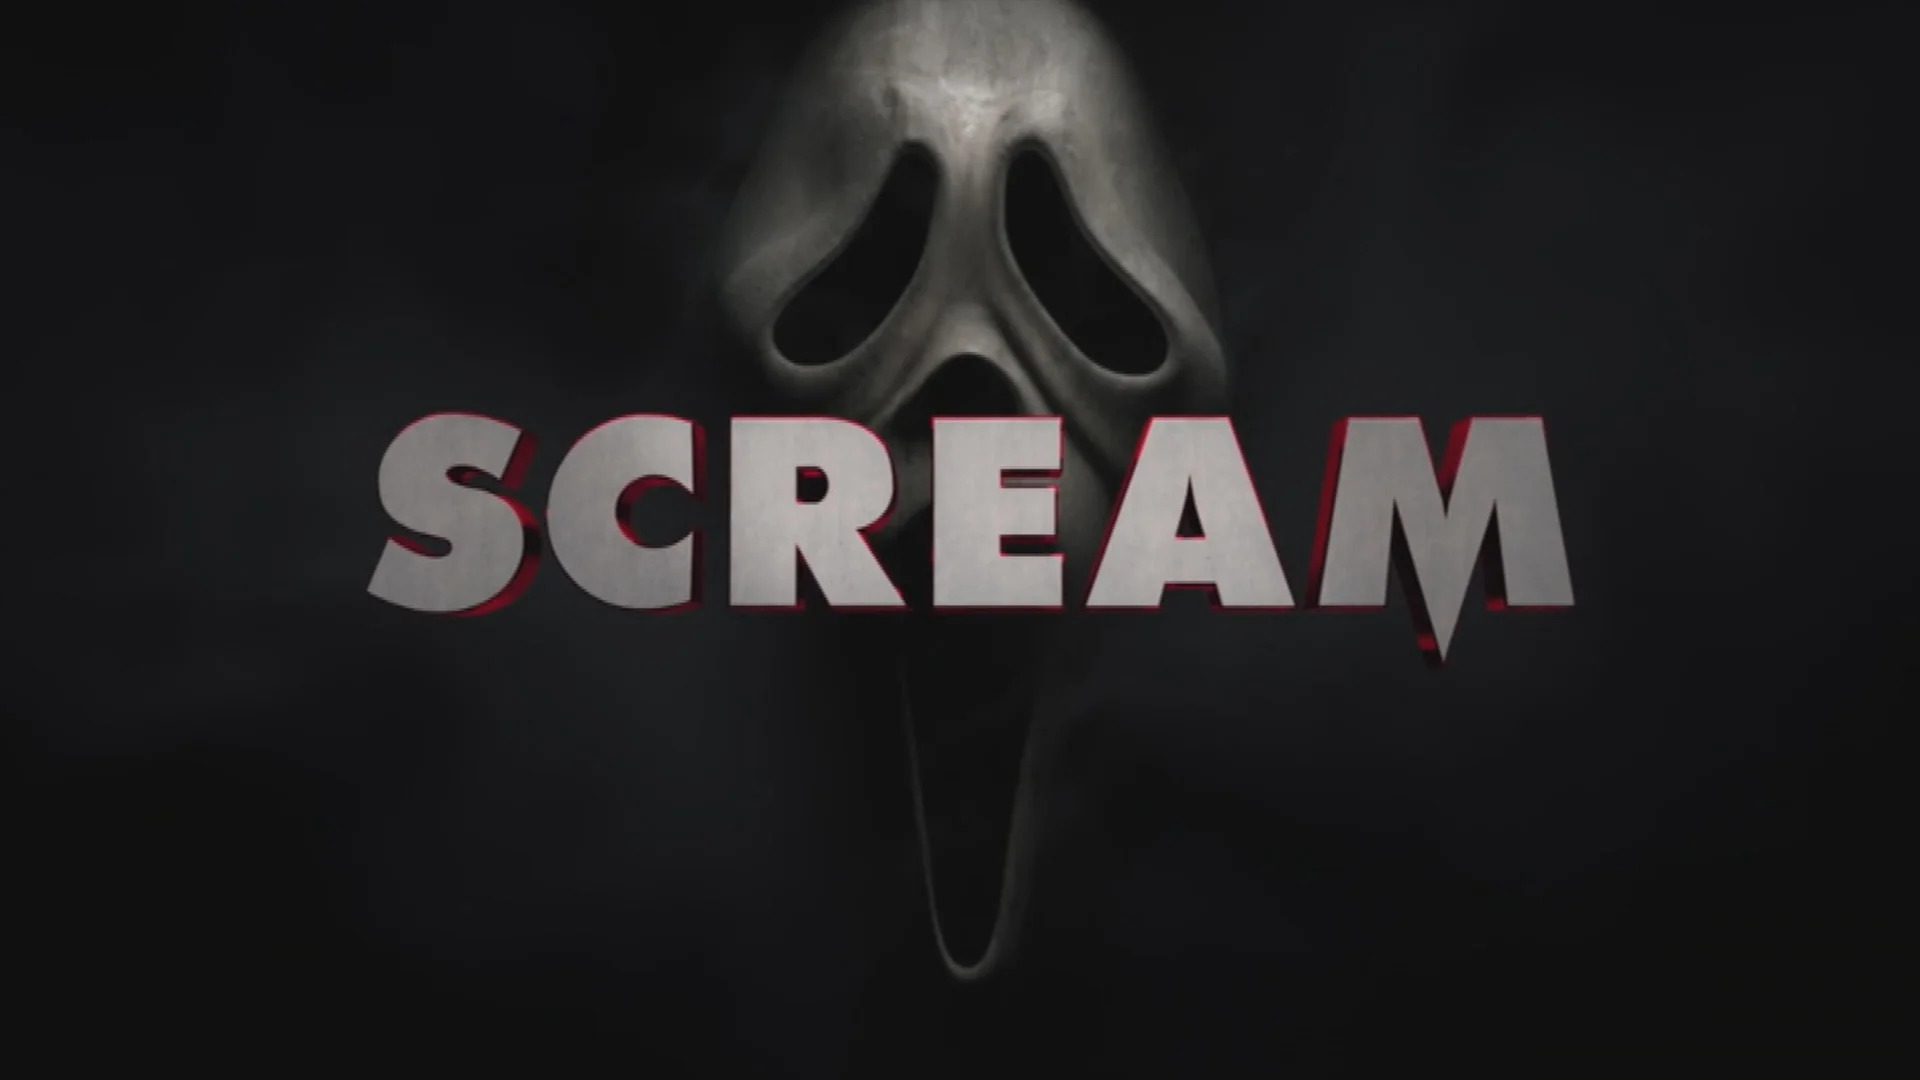 Scream trailer